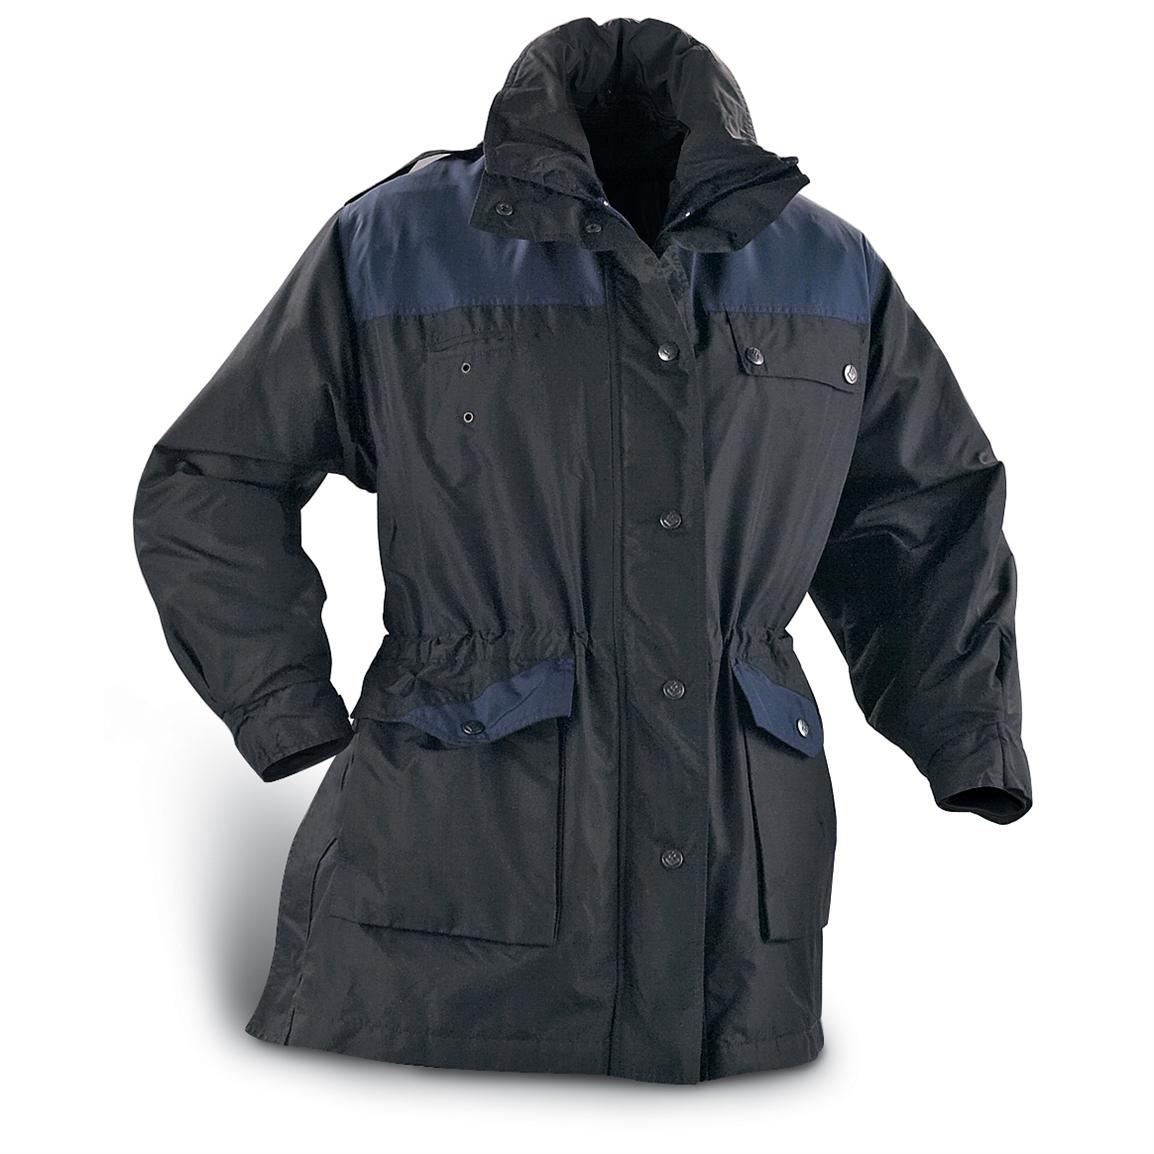 New Dutch Women's GORE-TEX® Police Jacket, Black - 25855, at Sportsman ...